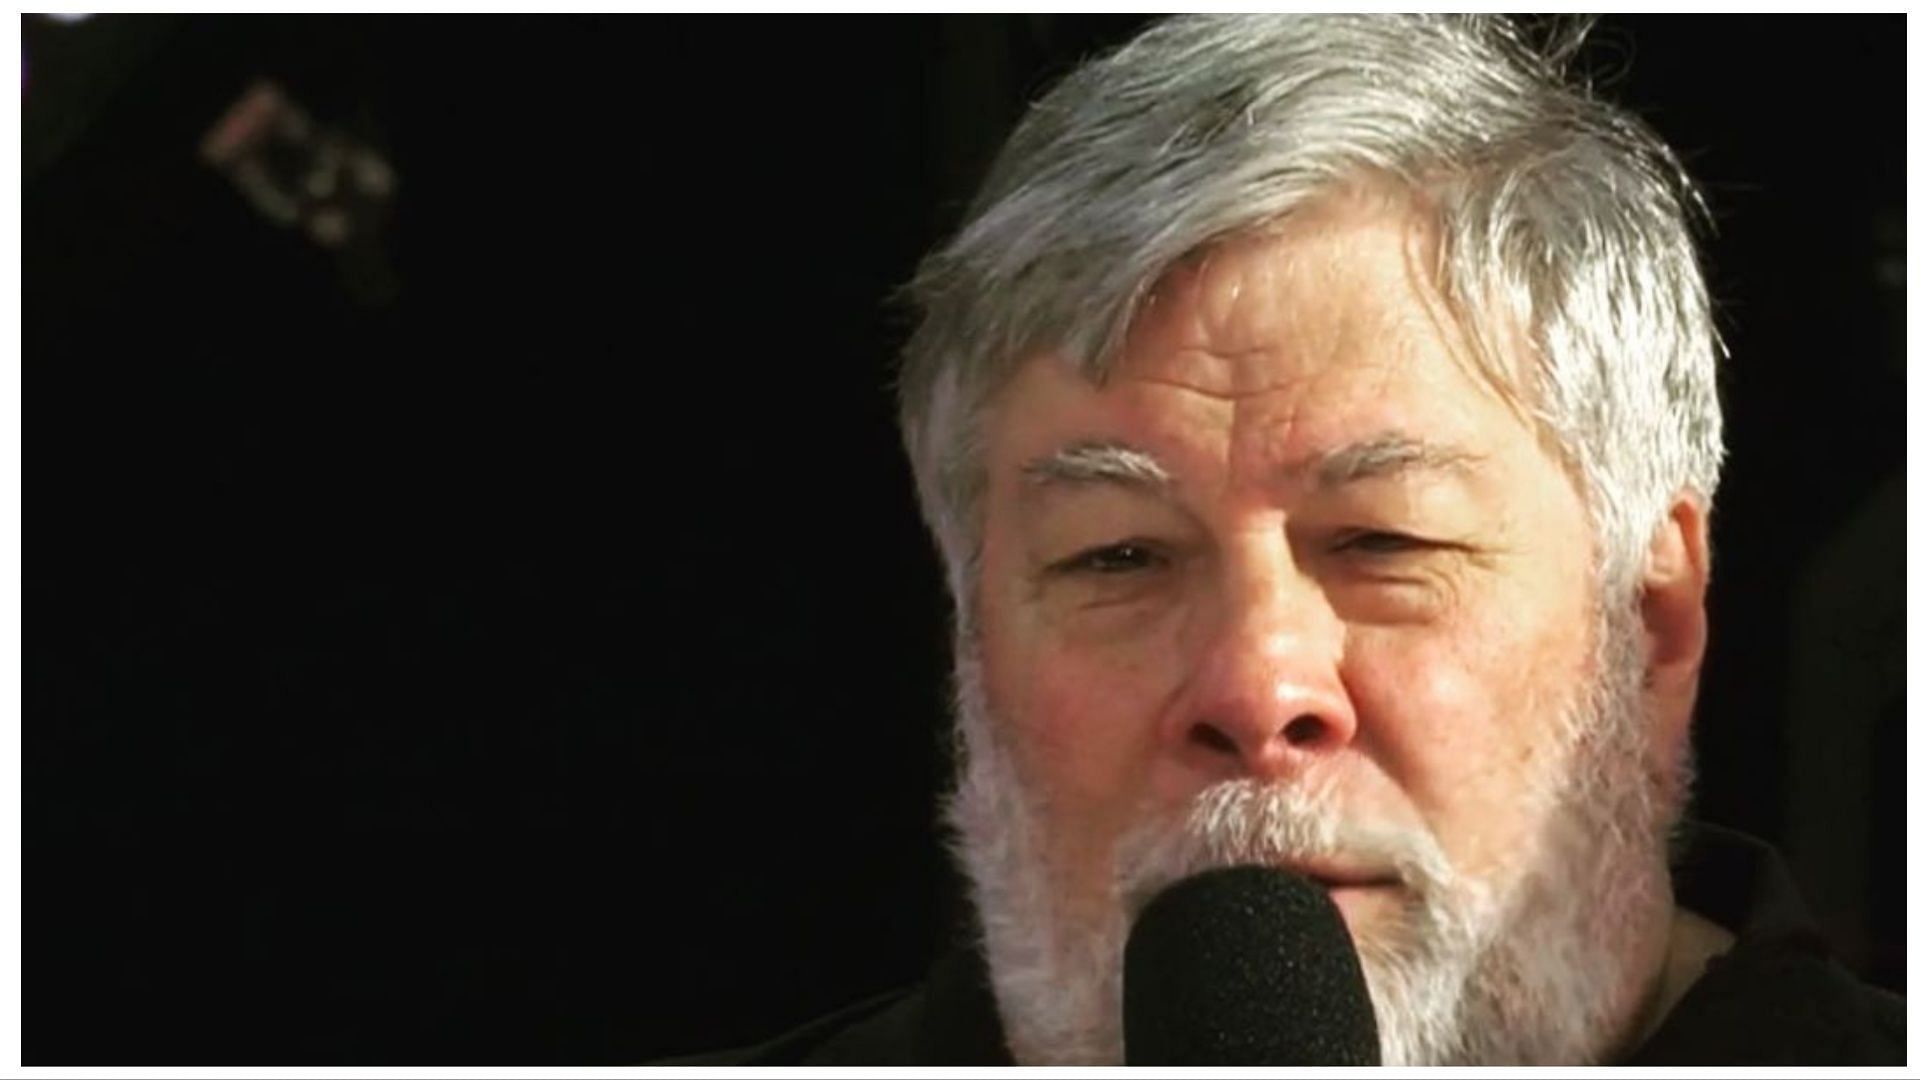 Apple Co-founder Steve Wozniak was hospitalized in Mexico: Local media reports